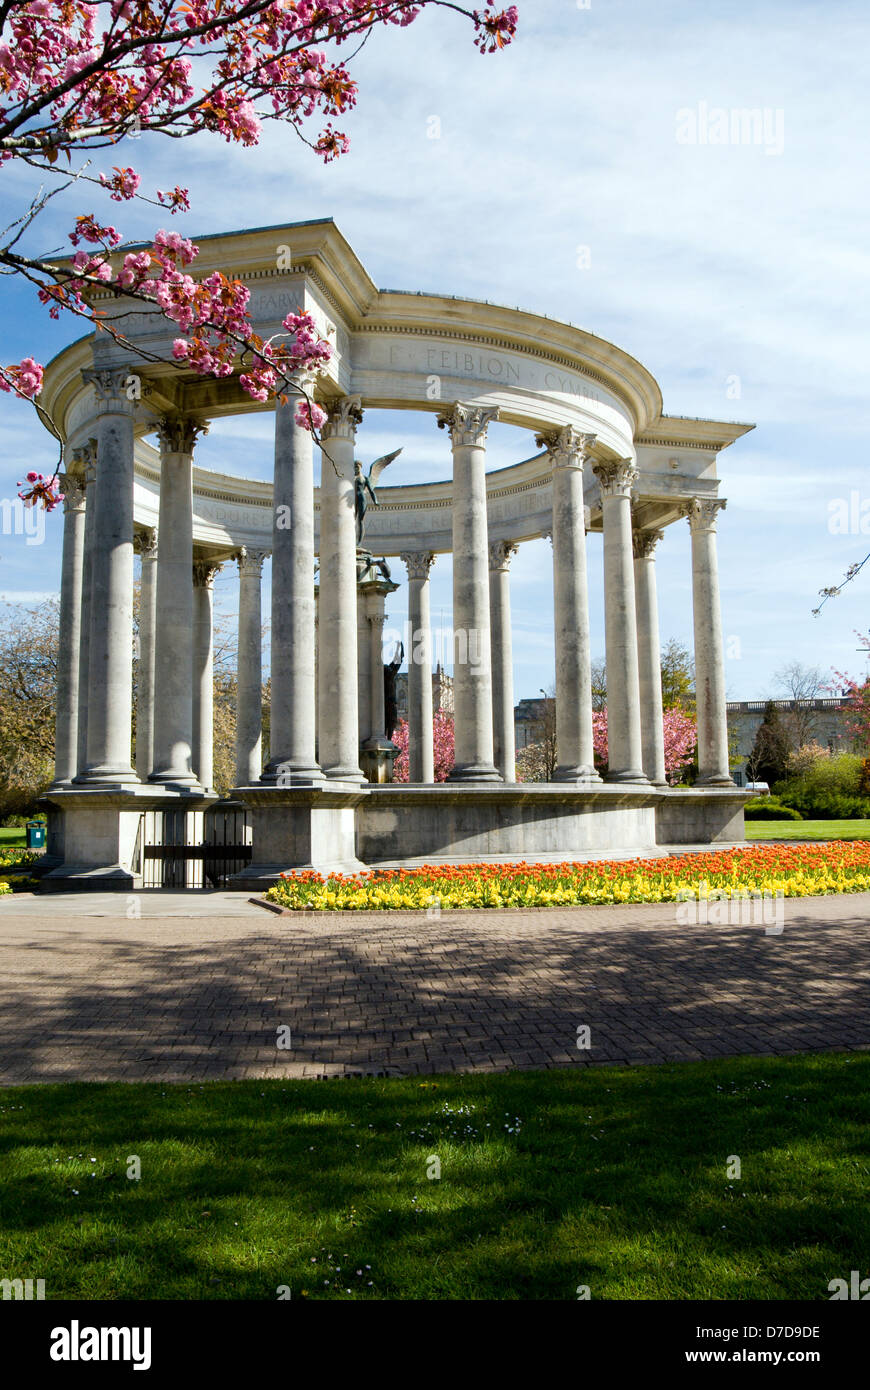 National War Memorial und Tulpen Alexandra Gardens, Cathays Park, Cardiff, Wales. Stockfoto